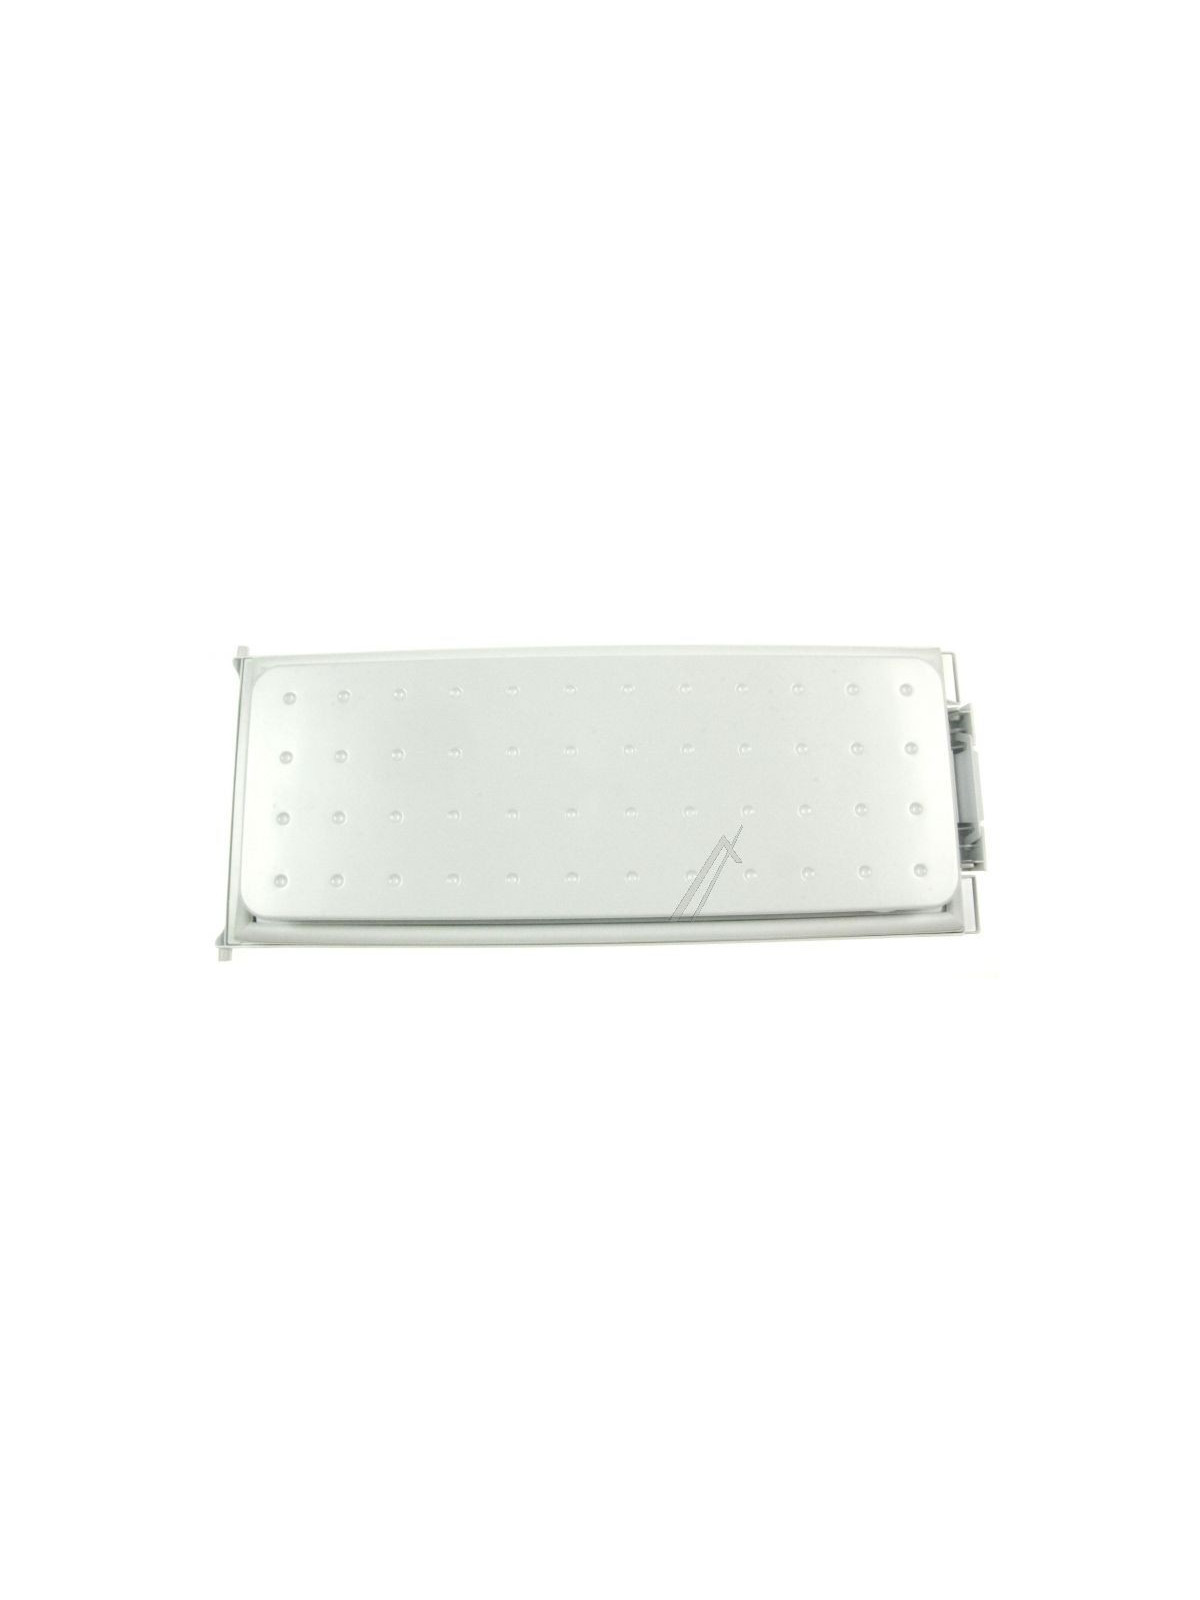 Portillon congélateur Bosch KFL18A40FF / Neff K1644X6FF - Réfrigérateur